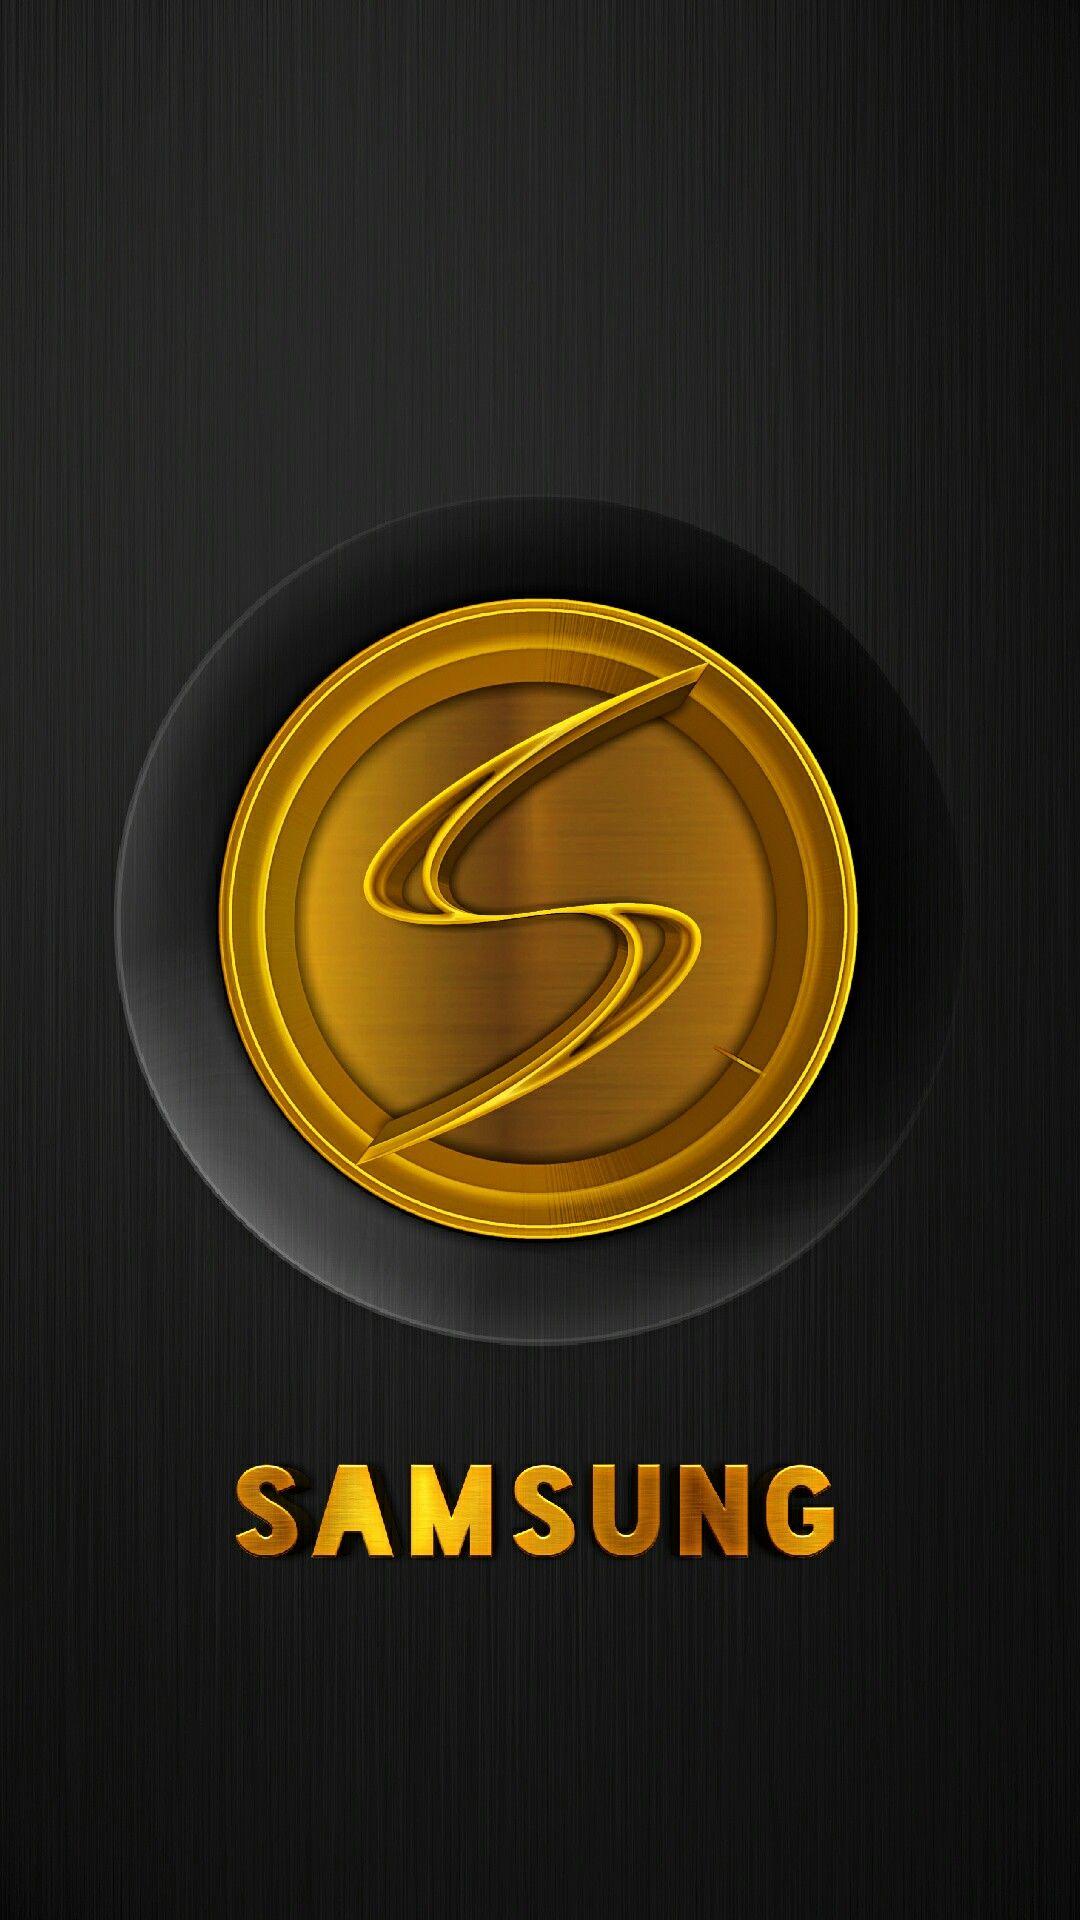 Samsung Gold Black. Wallpaper (for phones) ㊗